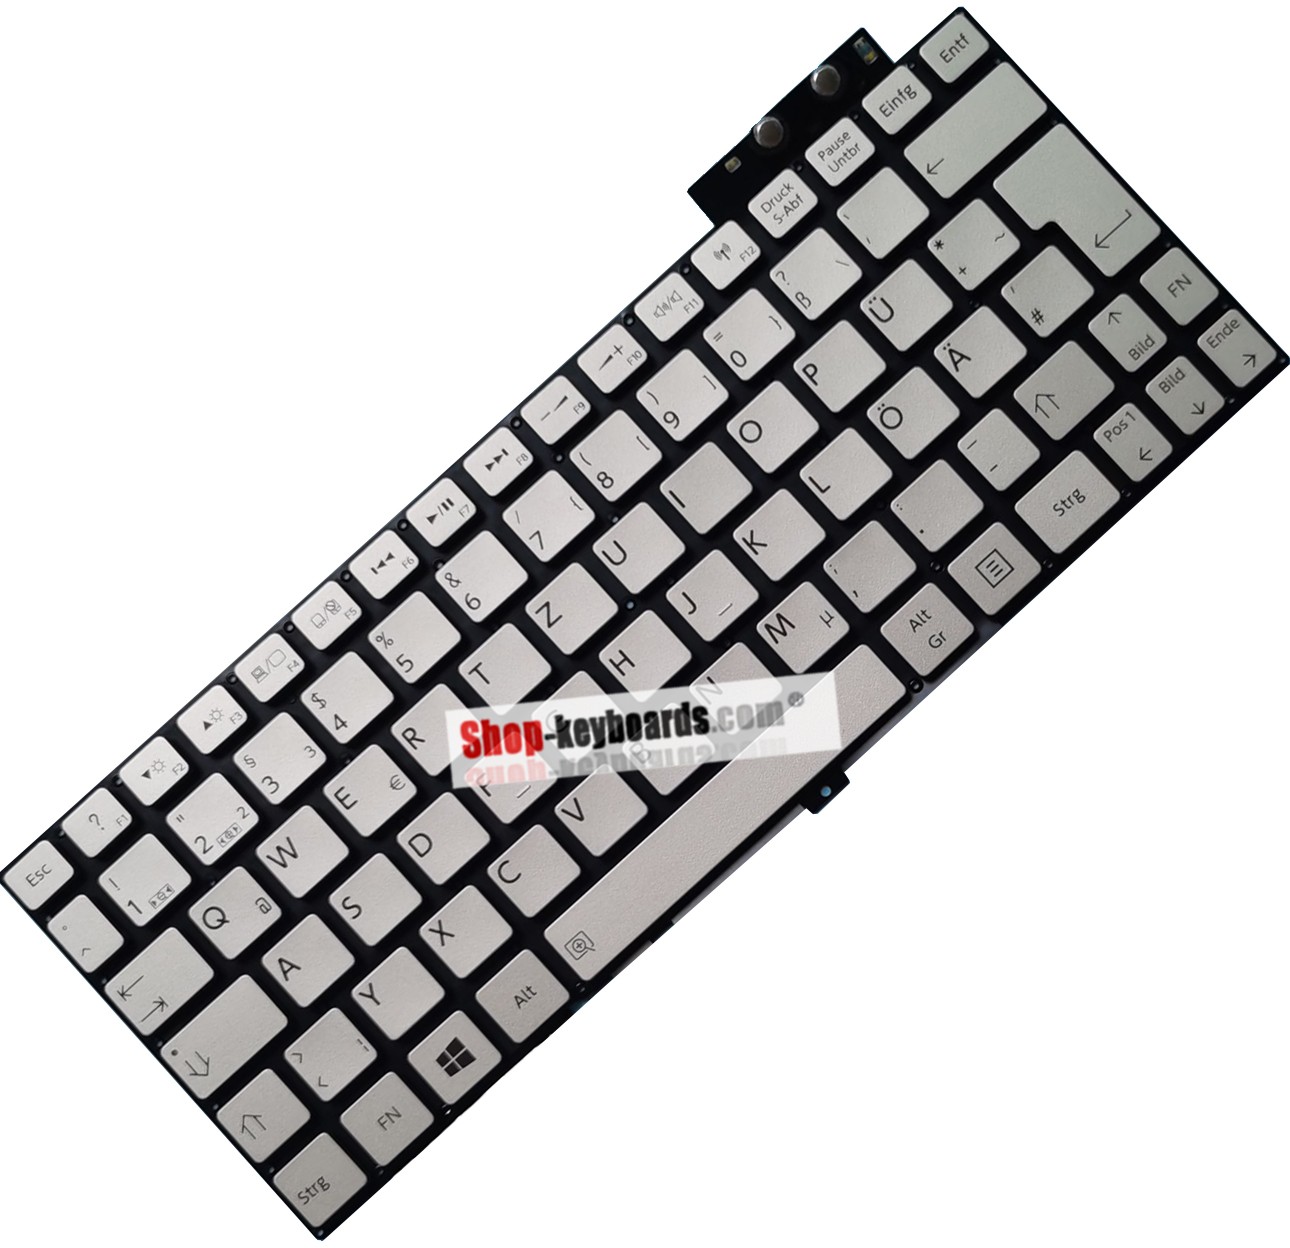 CNY MP-13N23U462005 Keyboard replacement